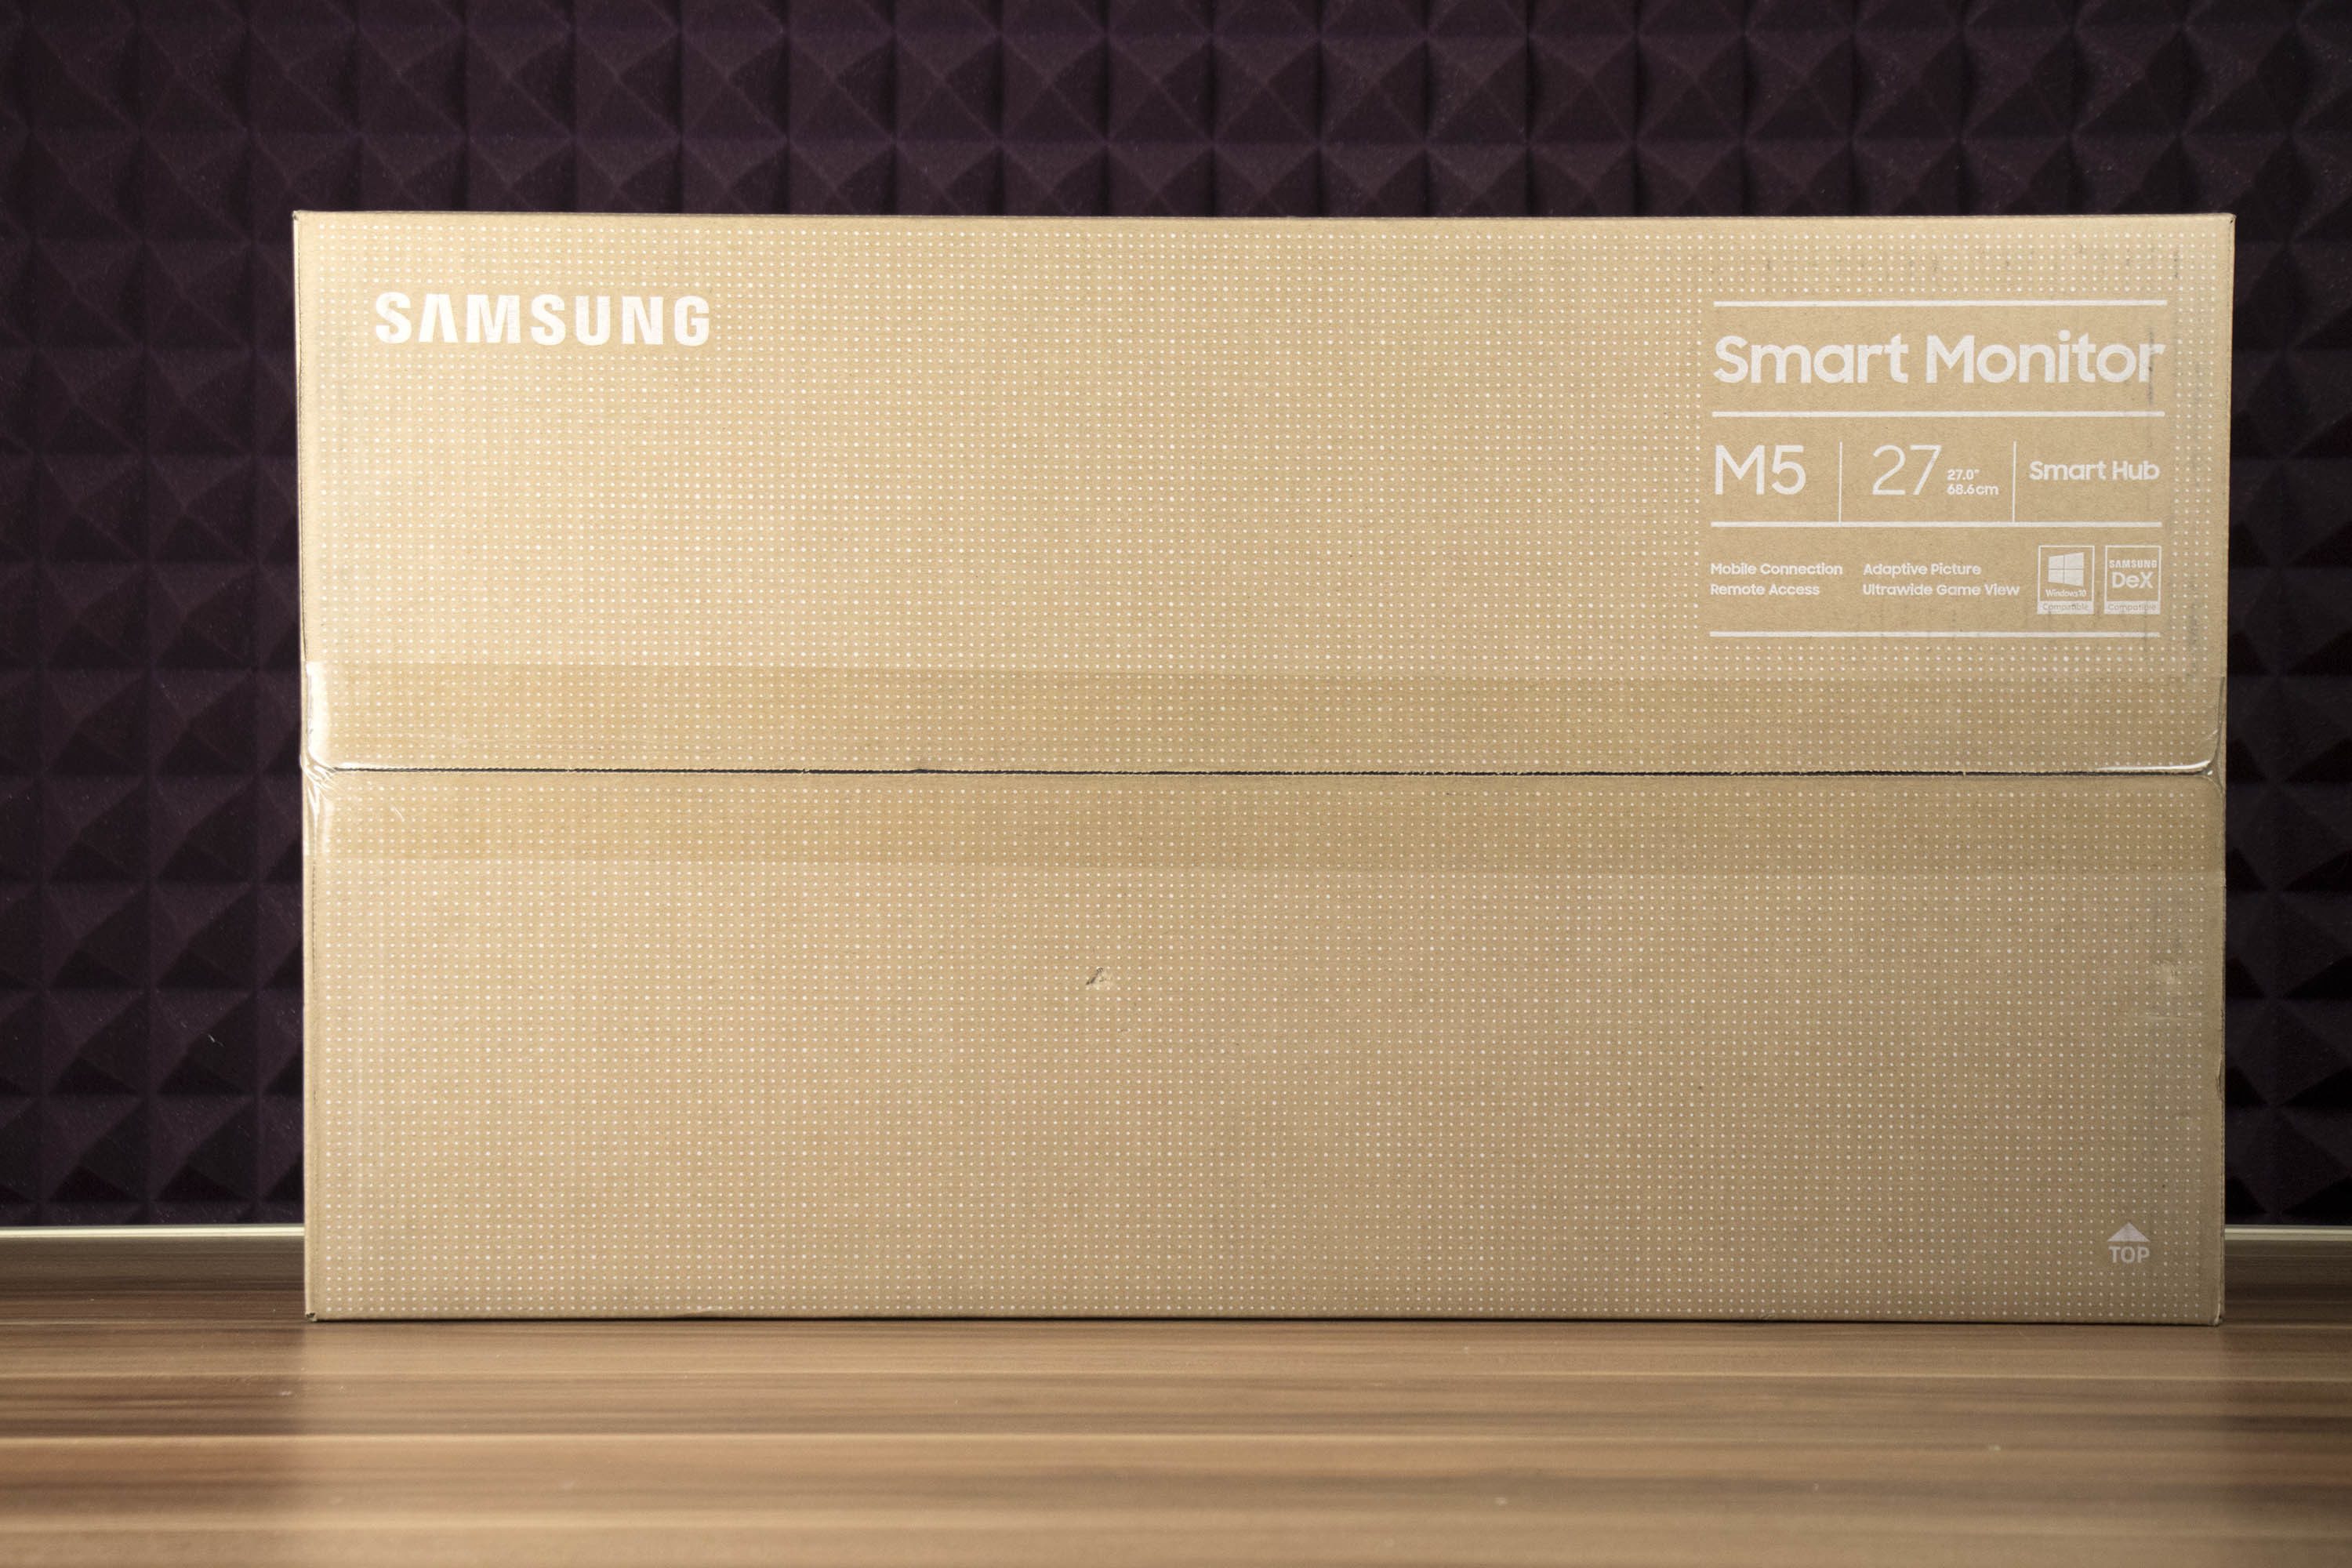 M5 monitor samsung smart qa1.fuse.tv: Samsung